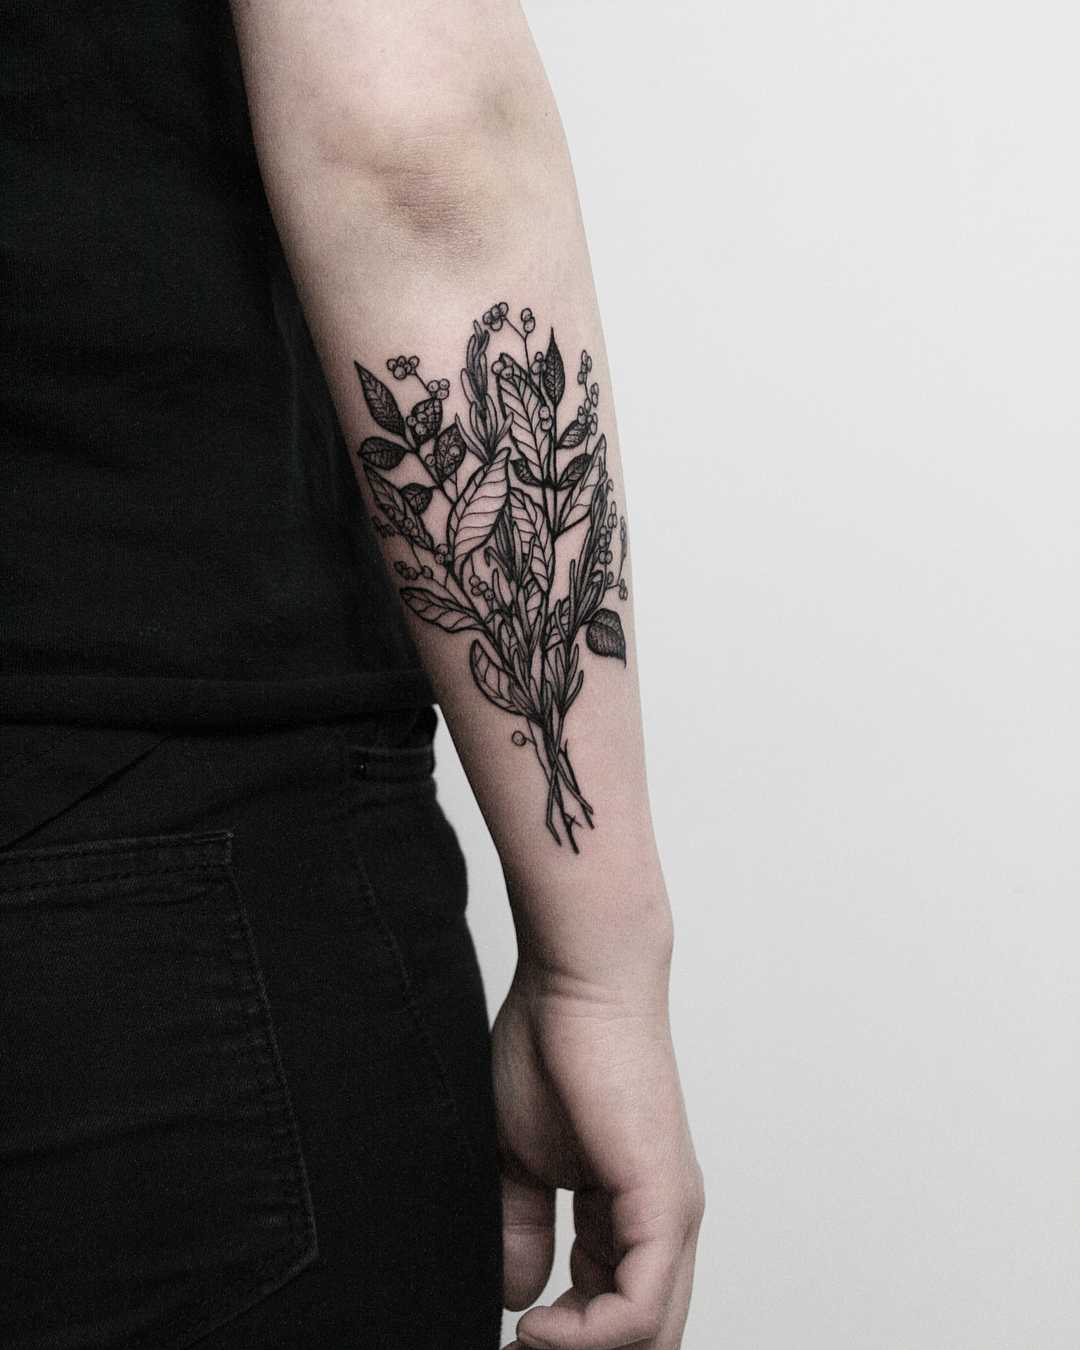 Blackwork floral bouquet by tattooist Spence @zz tattoo